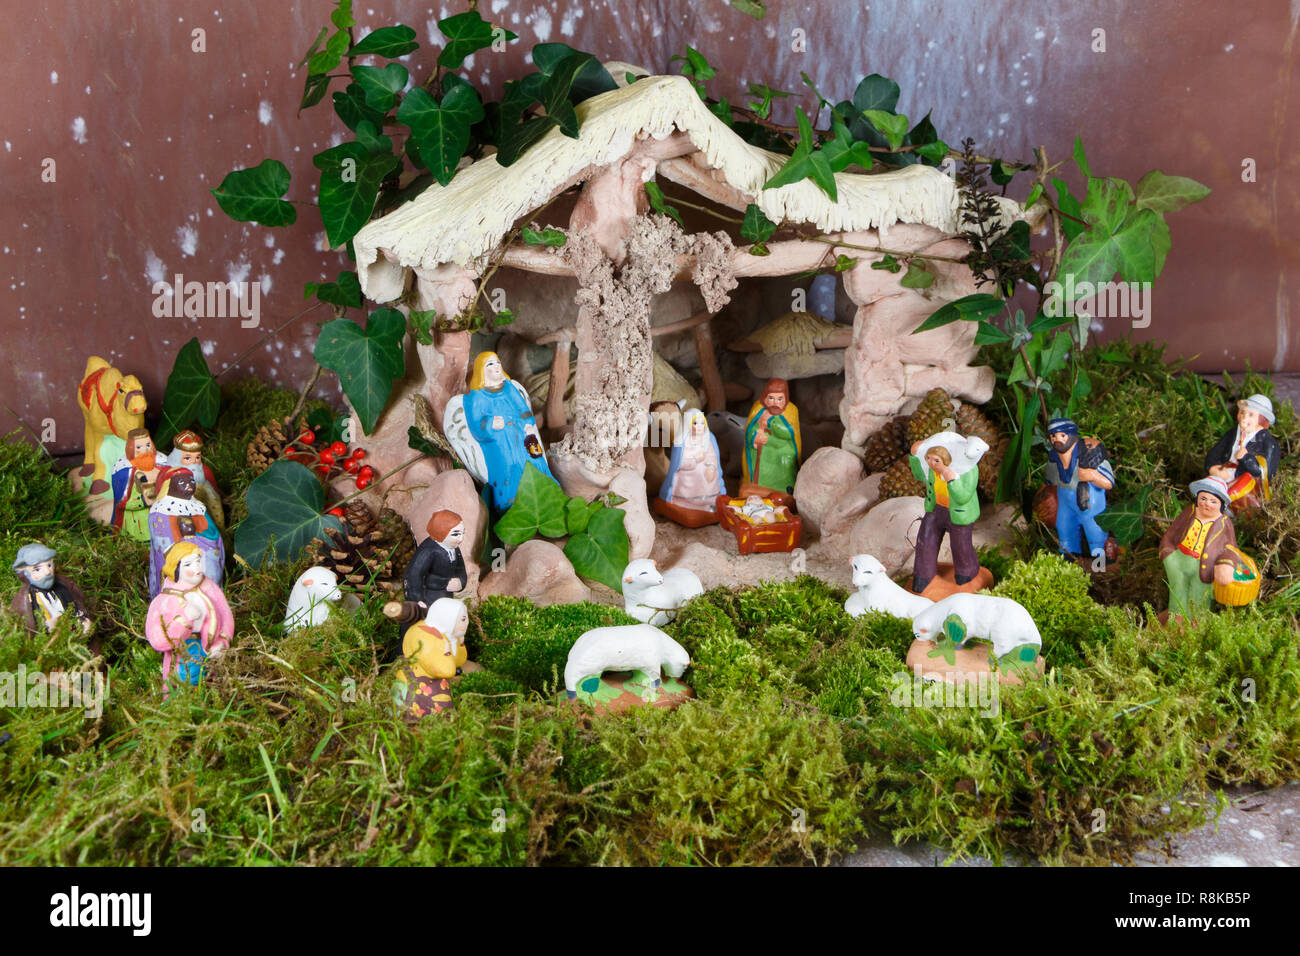 Nativity scene with provencal Christmas crib figures in terracotta Stock Photo